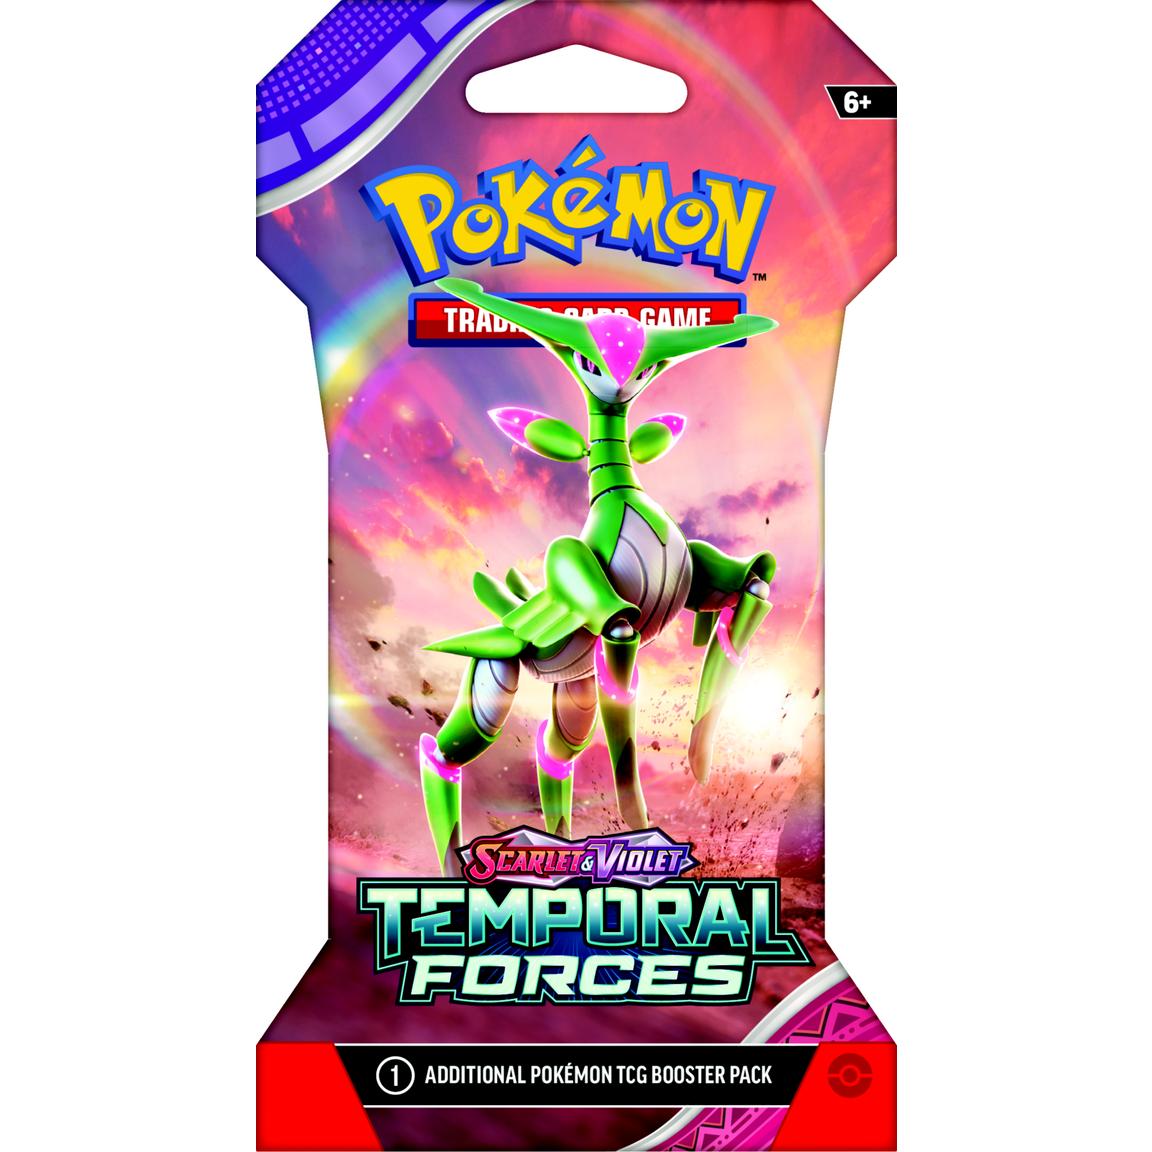 Pokémon TCG: SV - Temporal Forces Sleeved Booster Pack (10 Cards) - PokeRvmbooster pack